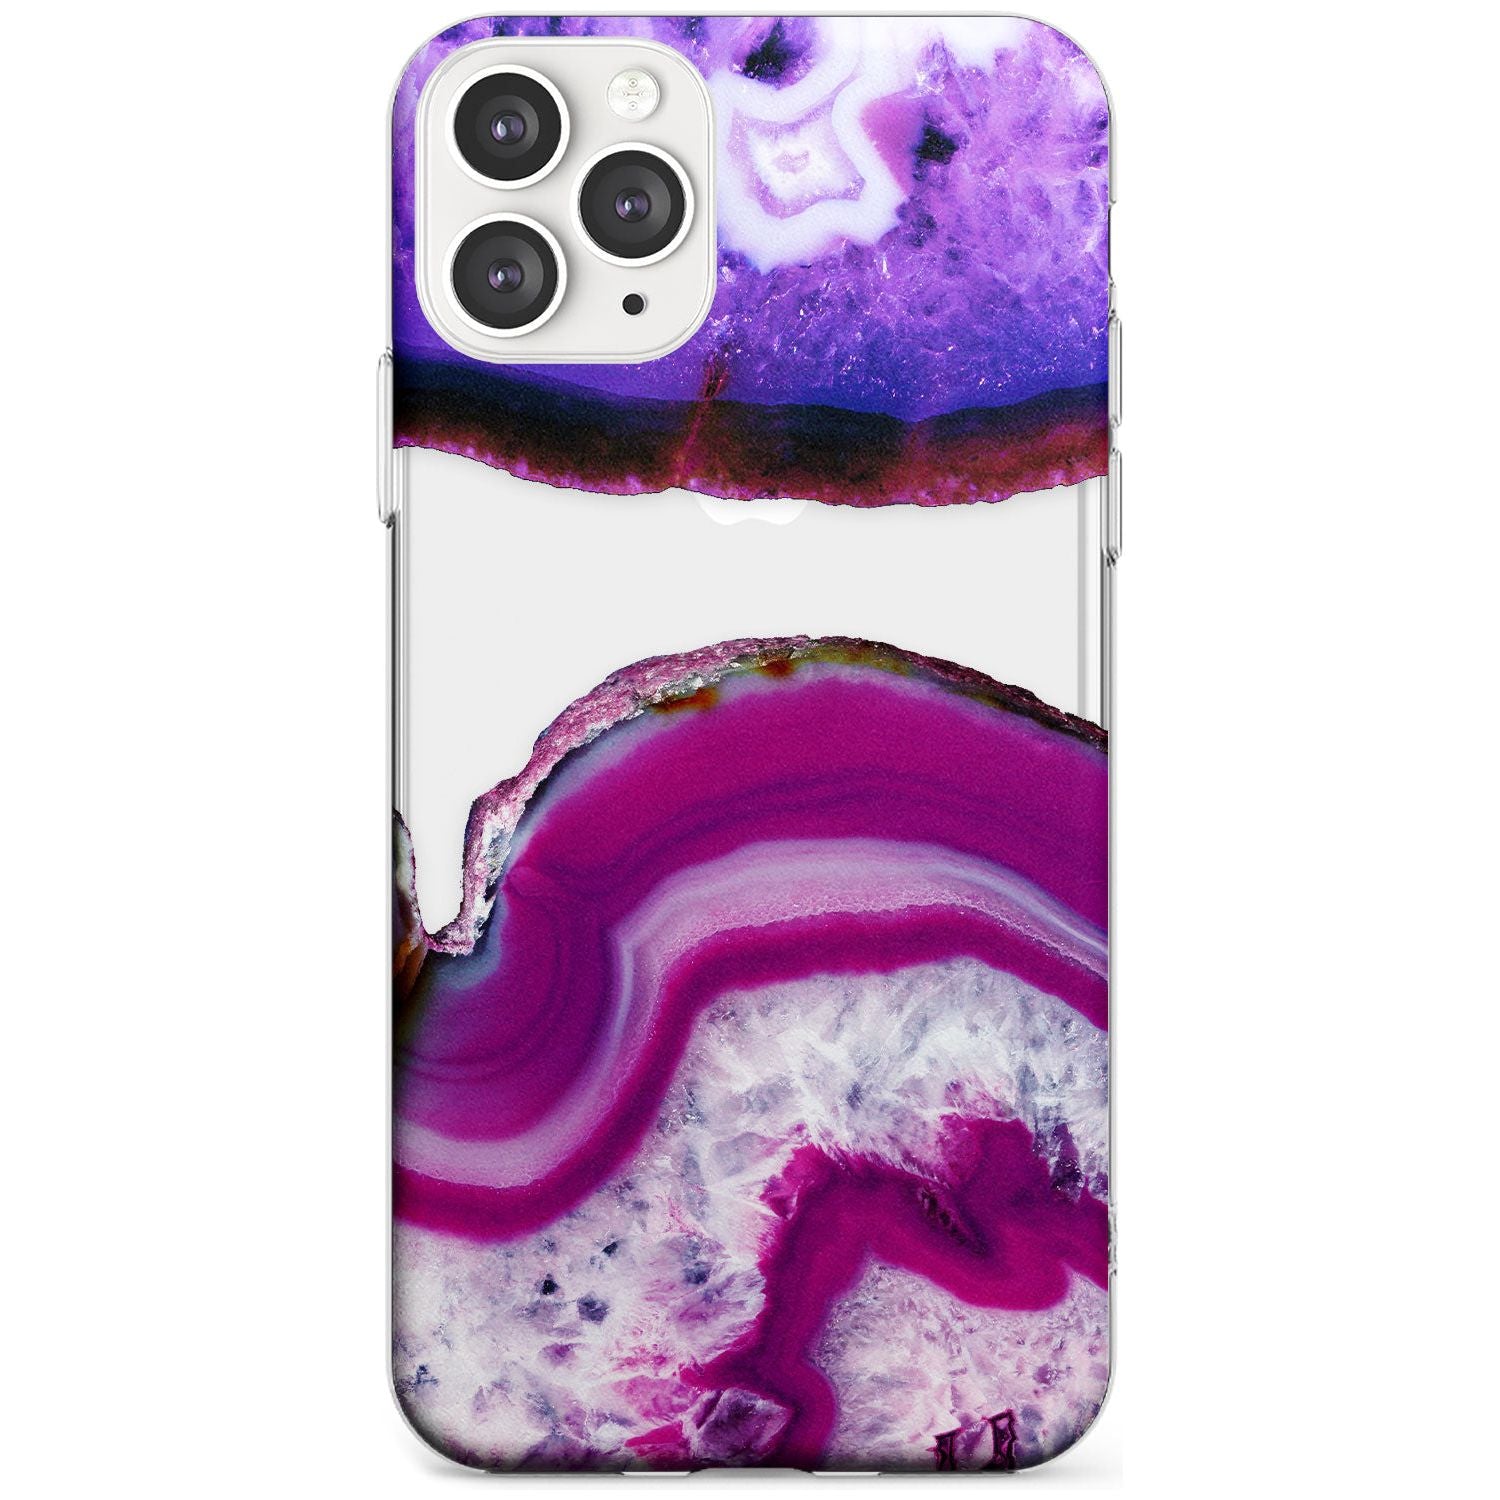 Purple & White Gemstone Crystal Clear Design Slim TPU Phone Case for iPhone 11 Pro Max